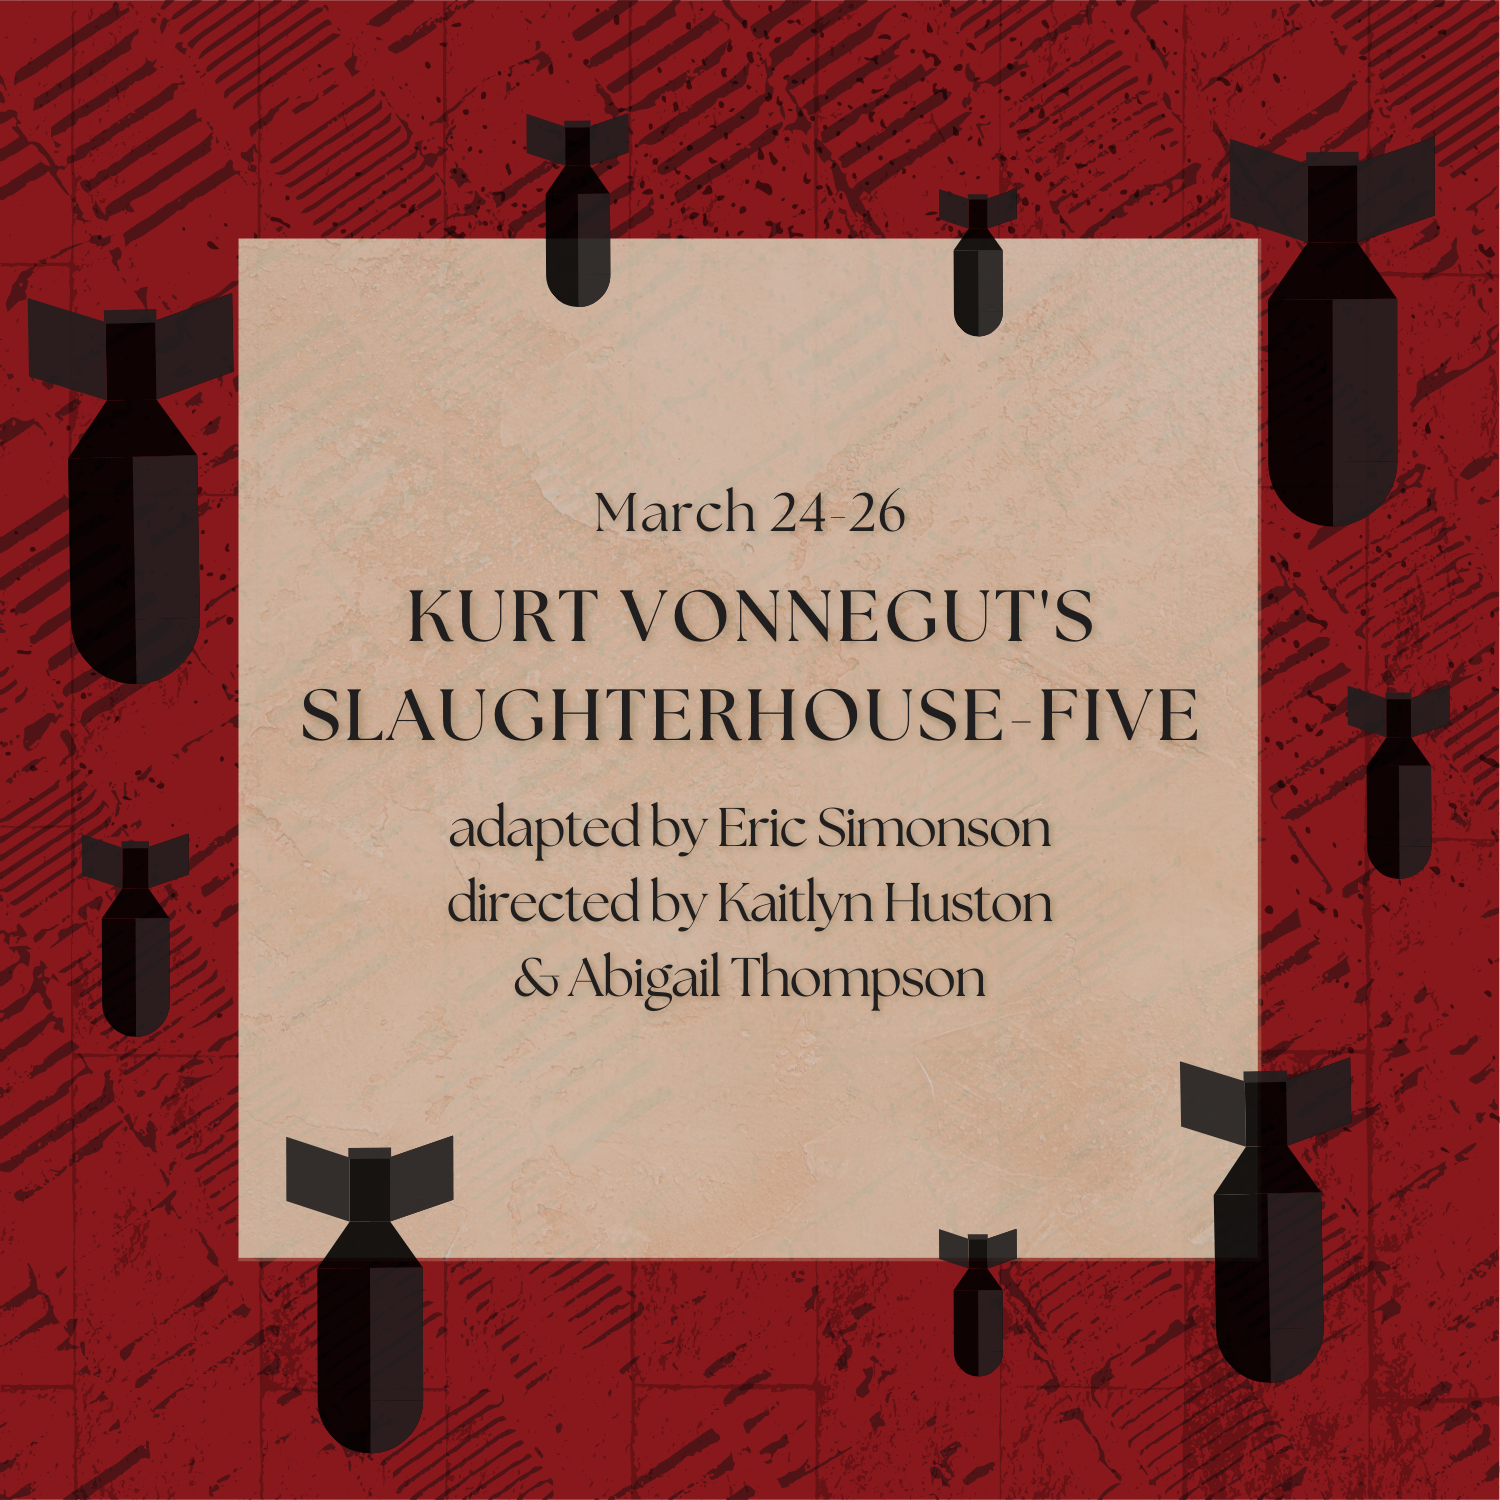 Kurt Vonnegut's Slaughterhouse-Five by Eric Simonson